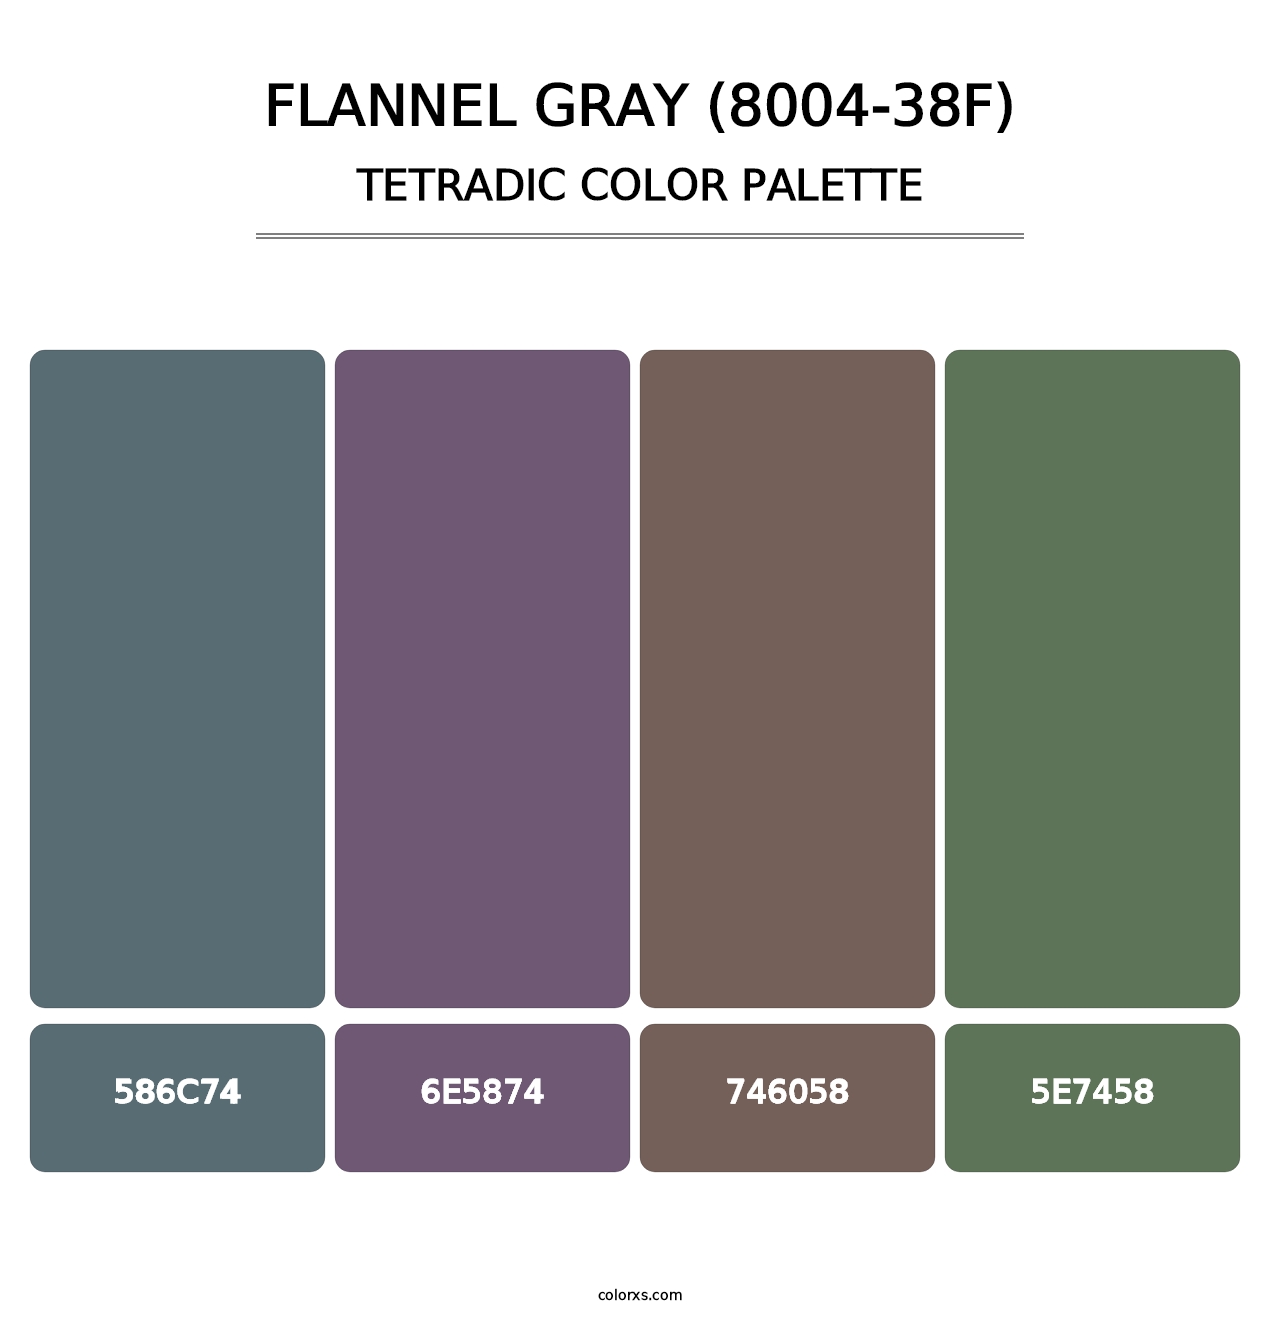 Flannel Gray (8004-38F) - Tetradic Color Palette